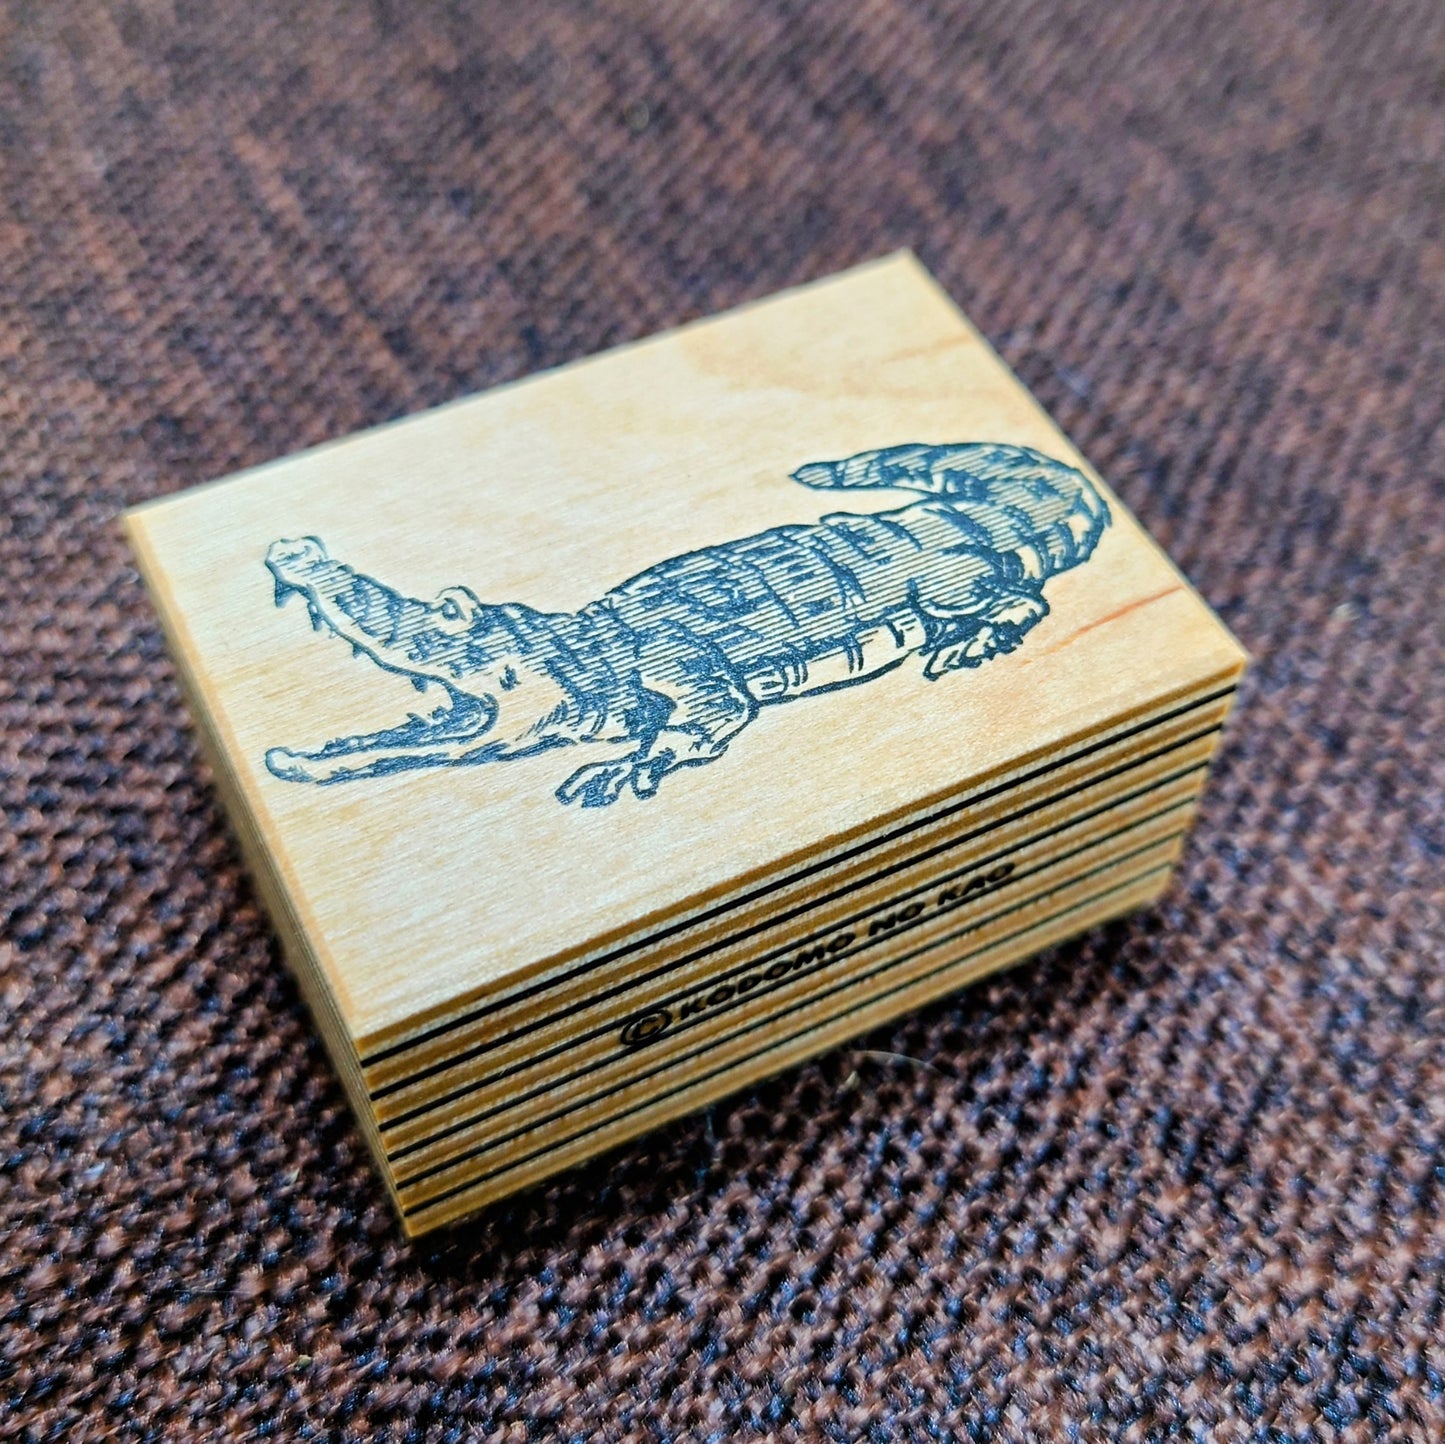 The Stamp series 鱷魚